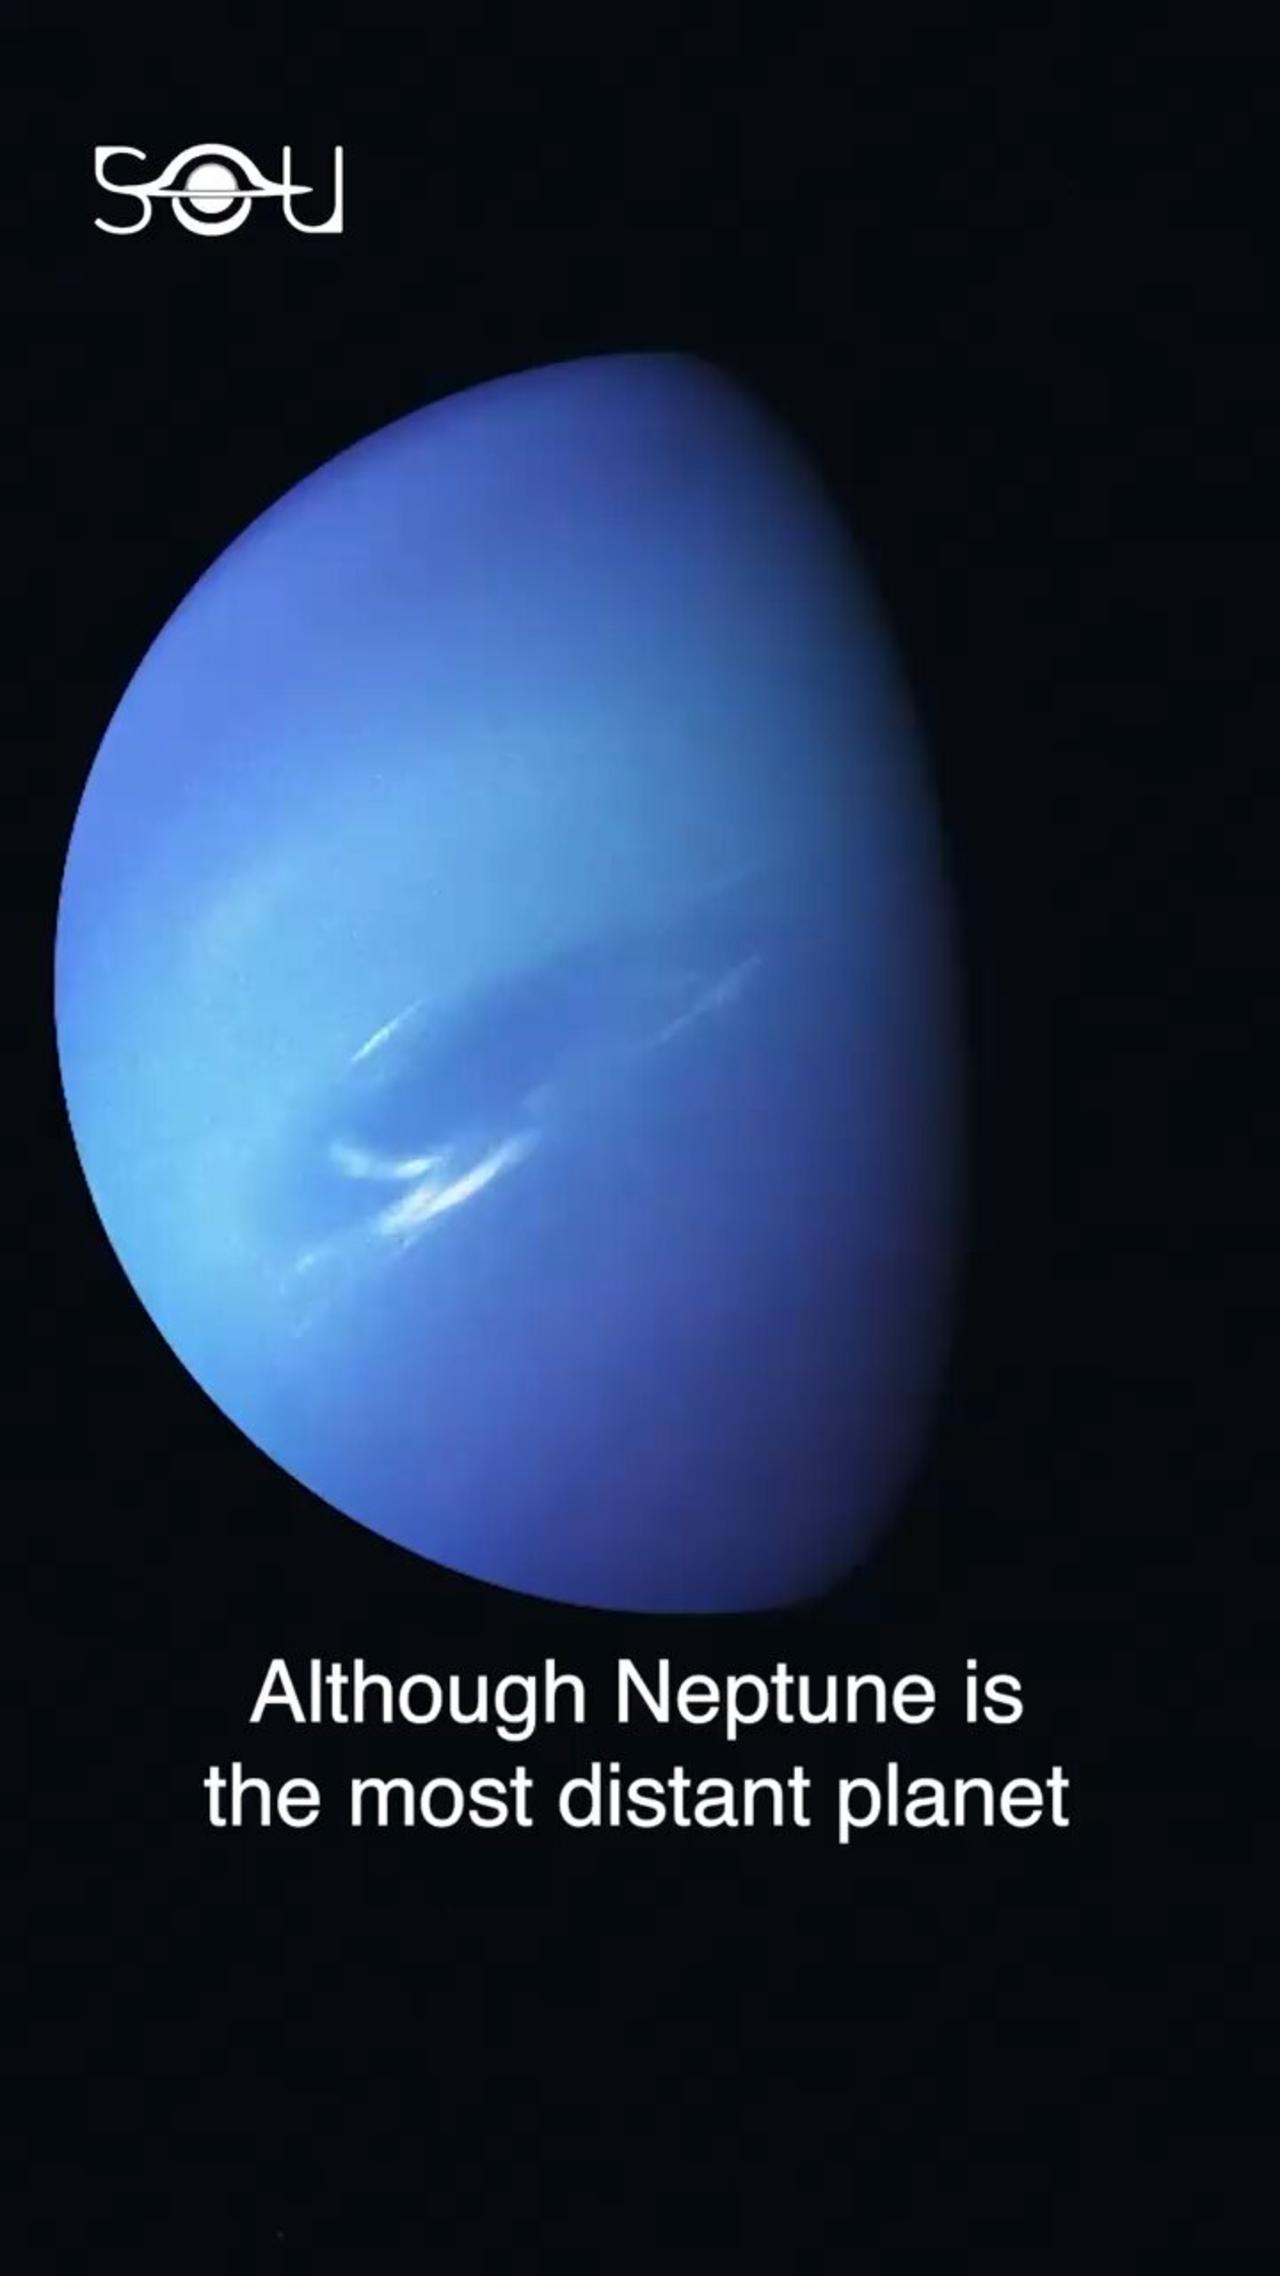 #The Secret Of Universe #NASA#Neptune#